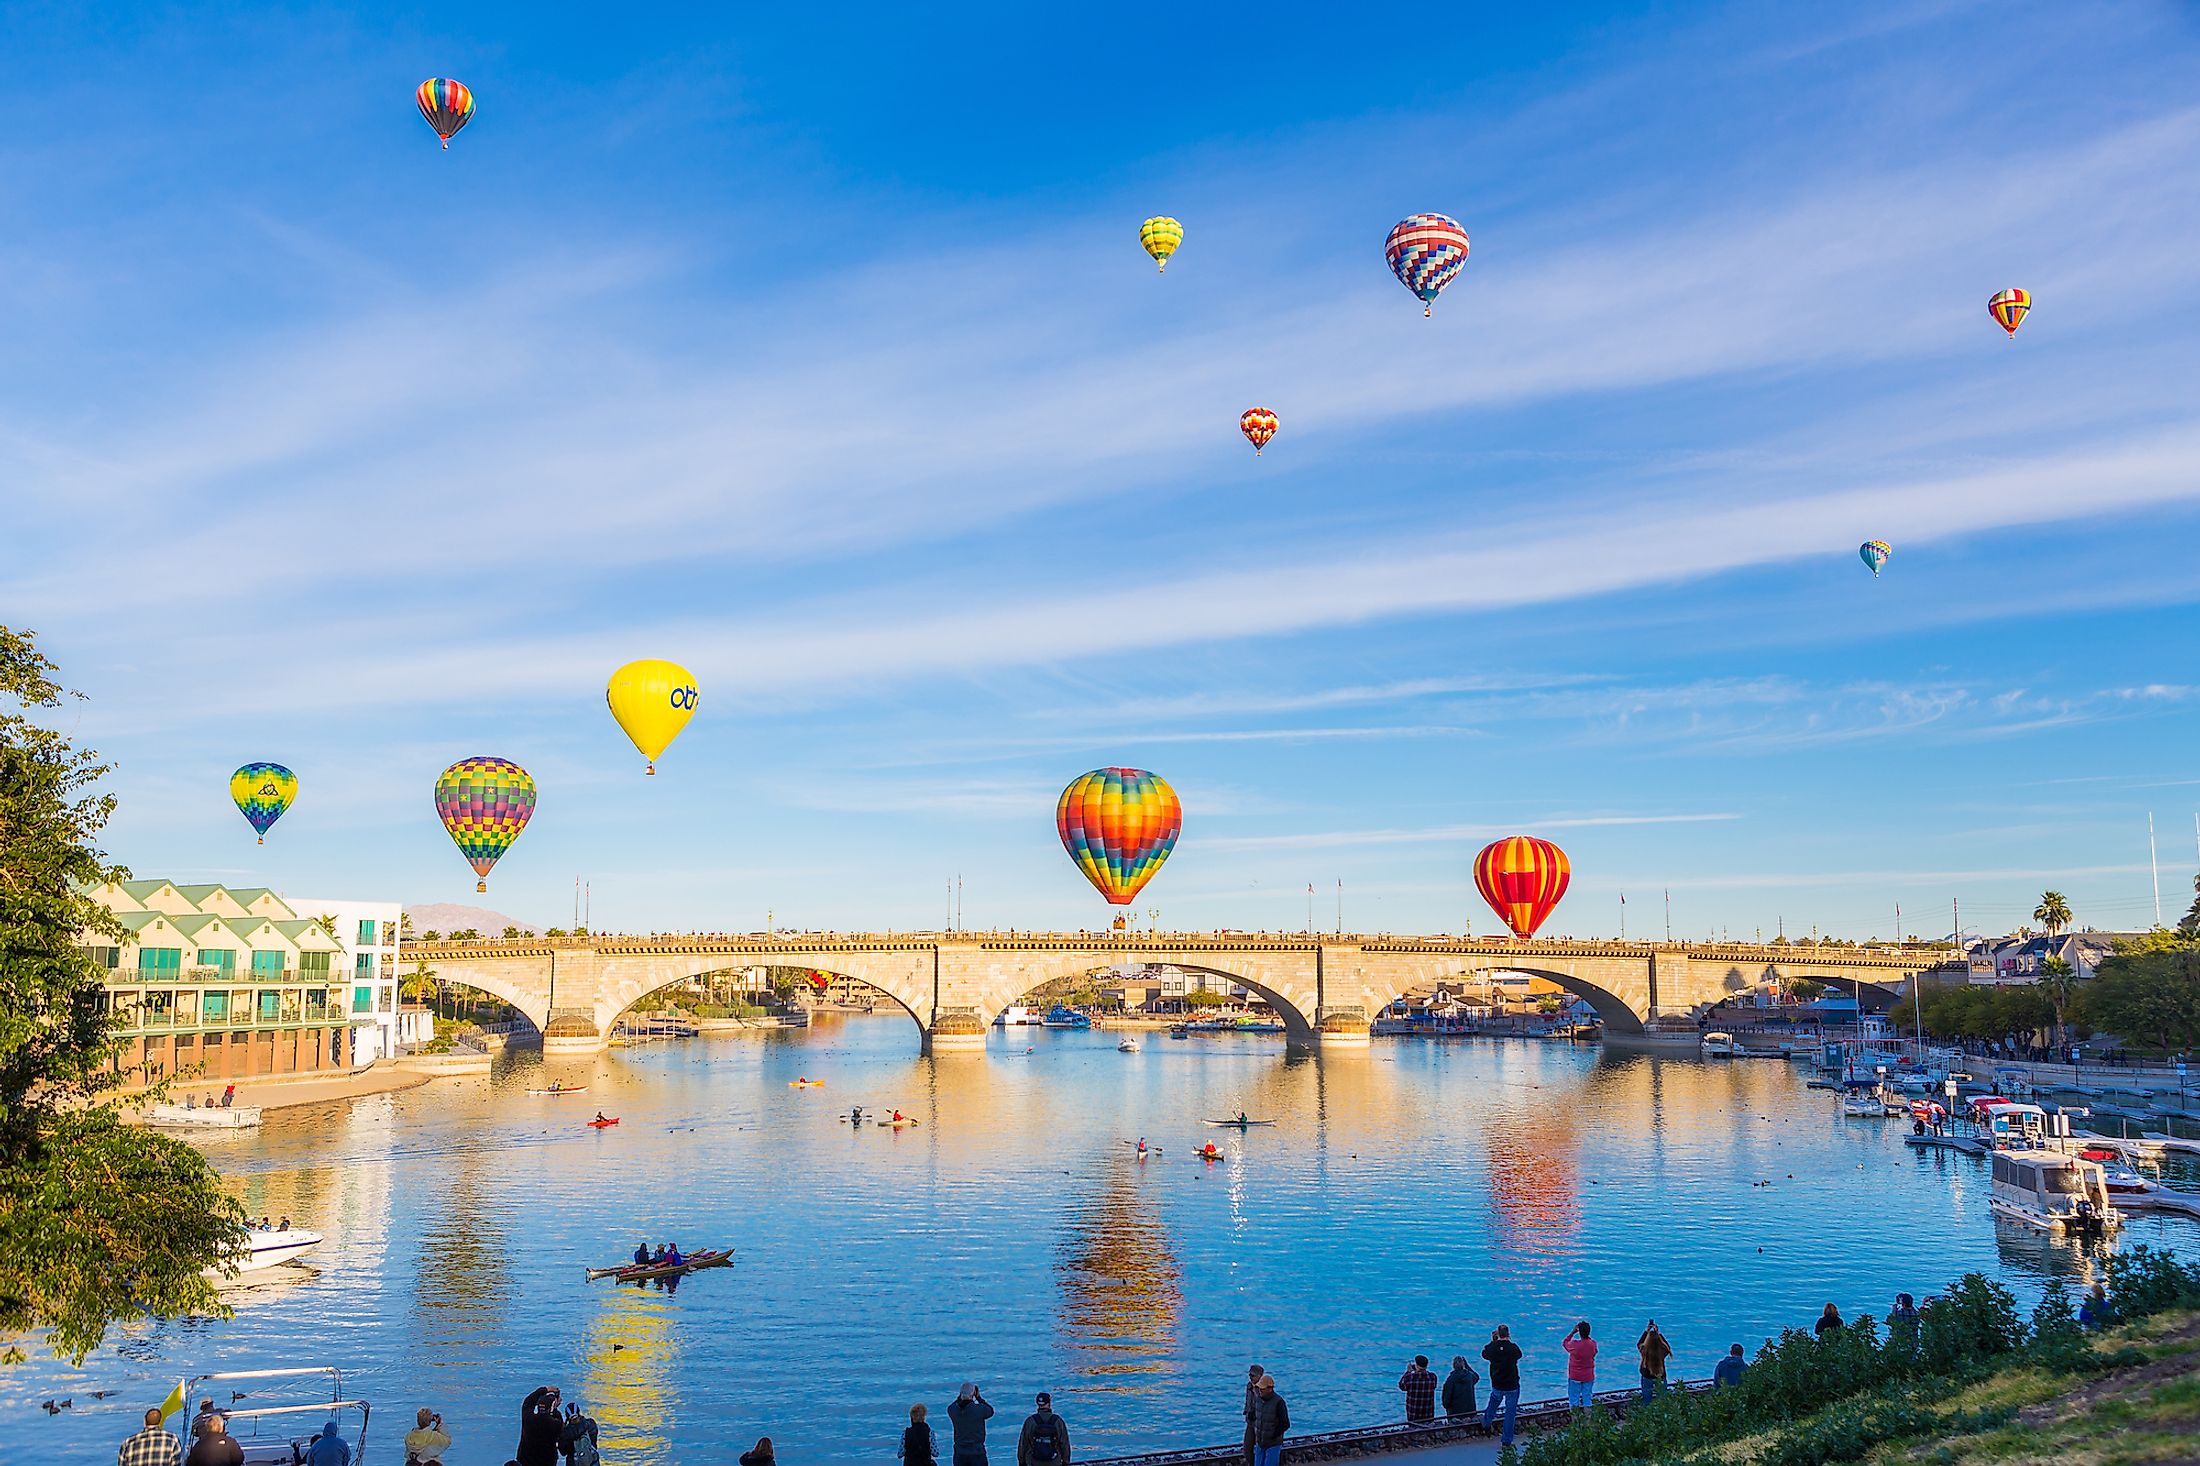 Hot air balloons flying above London Bridge in Lake Havasu. 